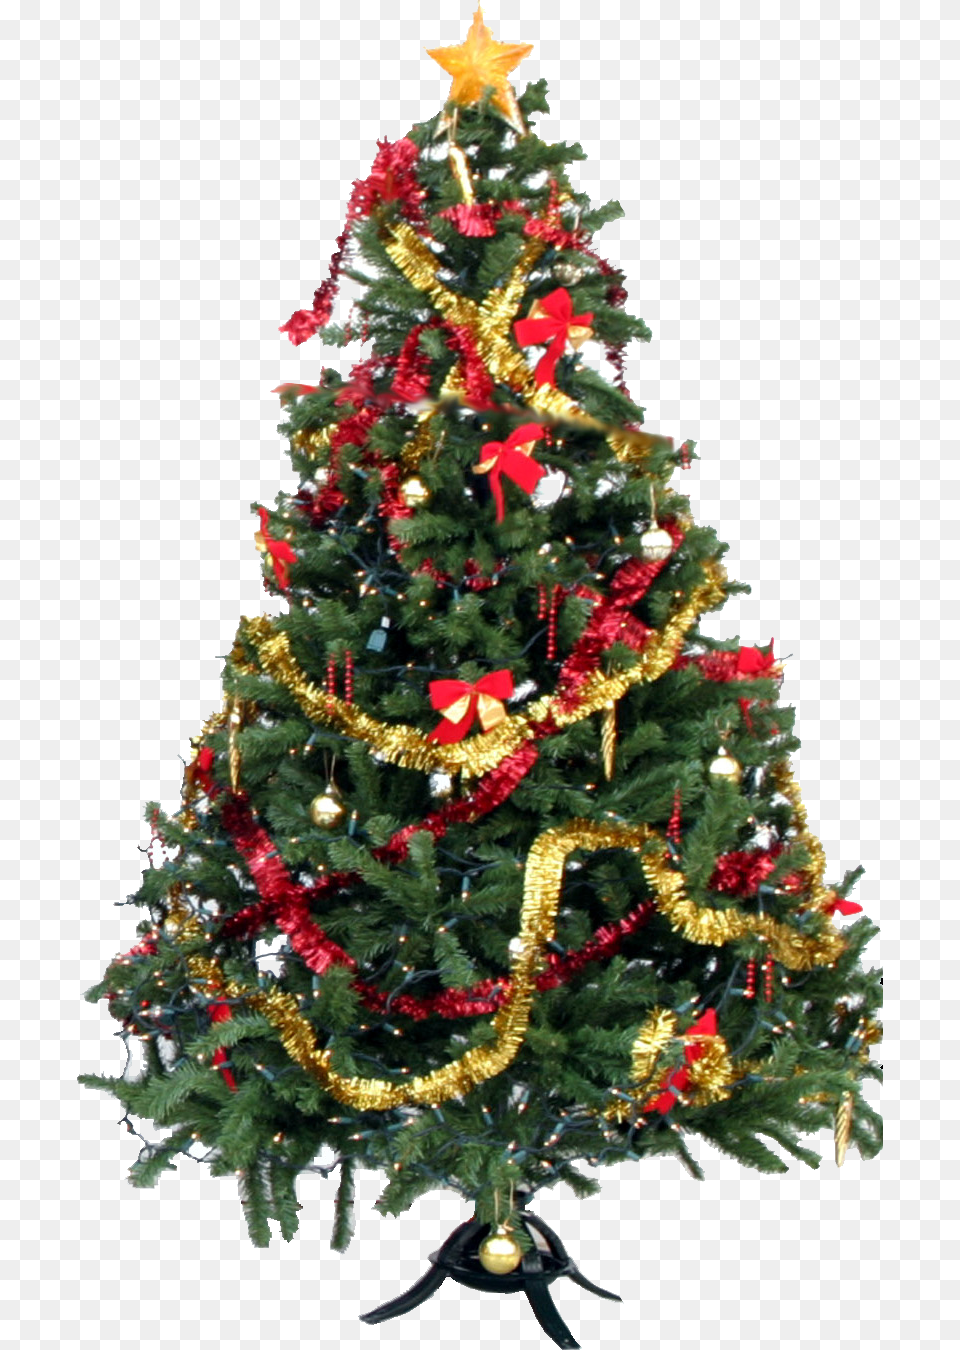 Christmas Tree, Plant, Christmas Decorations, Festival, Christmas Tree Png